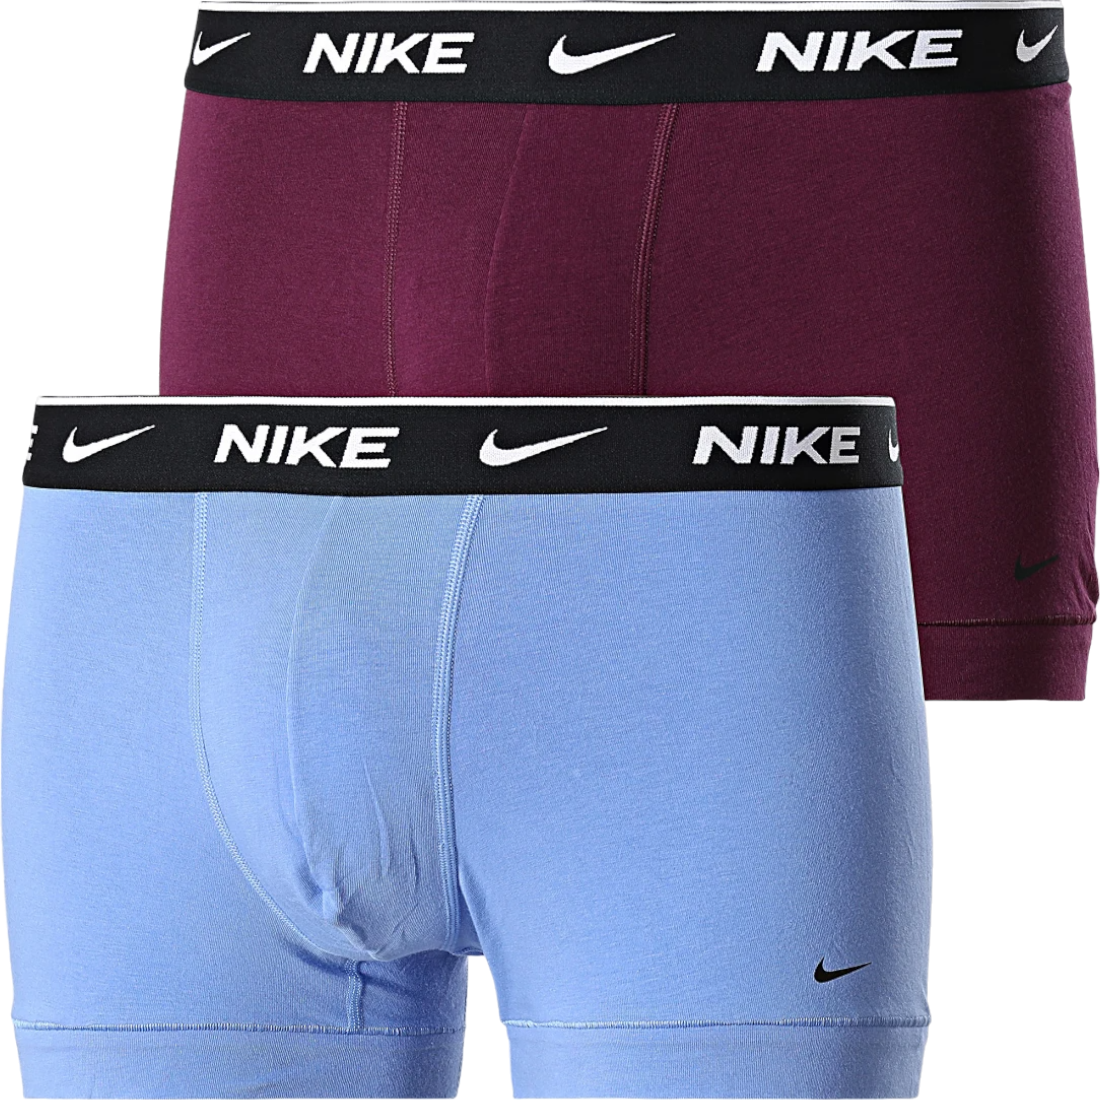 Calzoncillos bóxer Nike Cotton Trunk 2 pcs